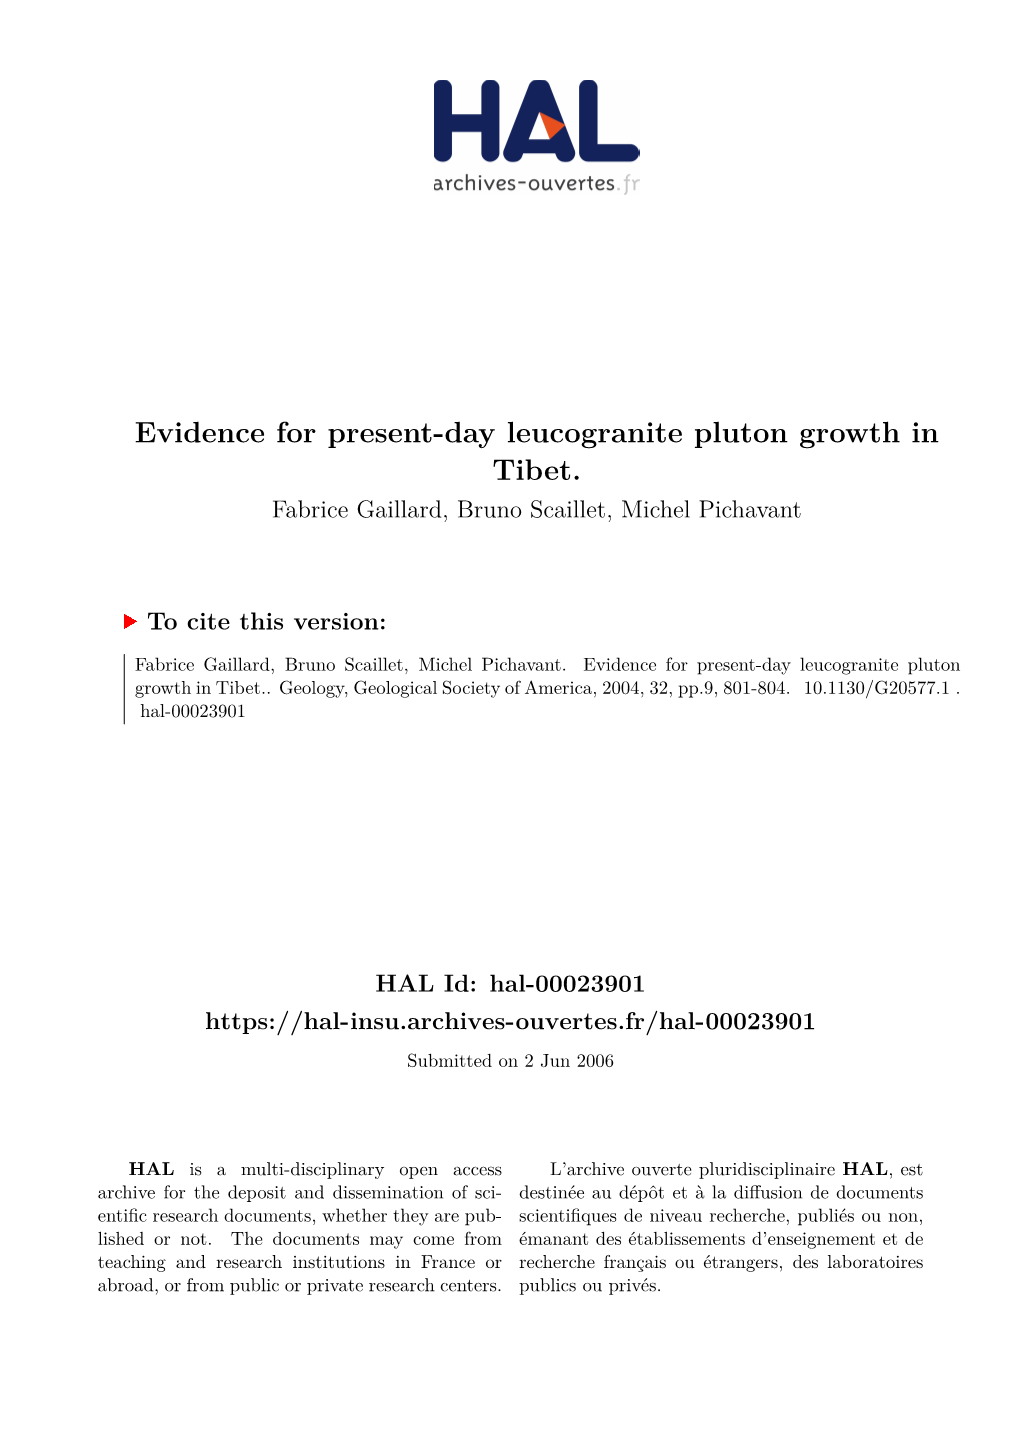 Evidence for Present-Day Leucogranite Pluton Growth in Tibet. Fabrice Gaillard, Bruno Scaillet, Michel Pichavant